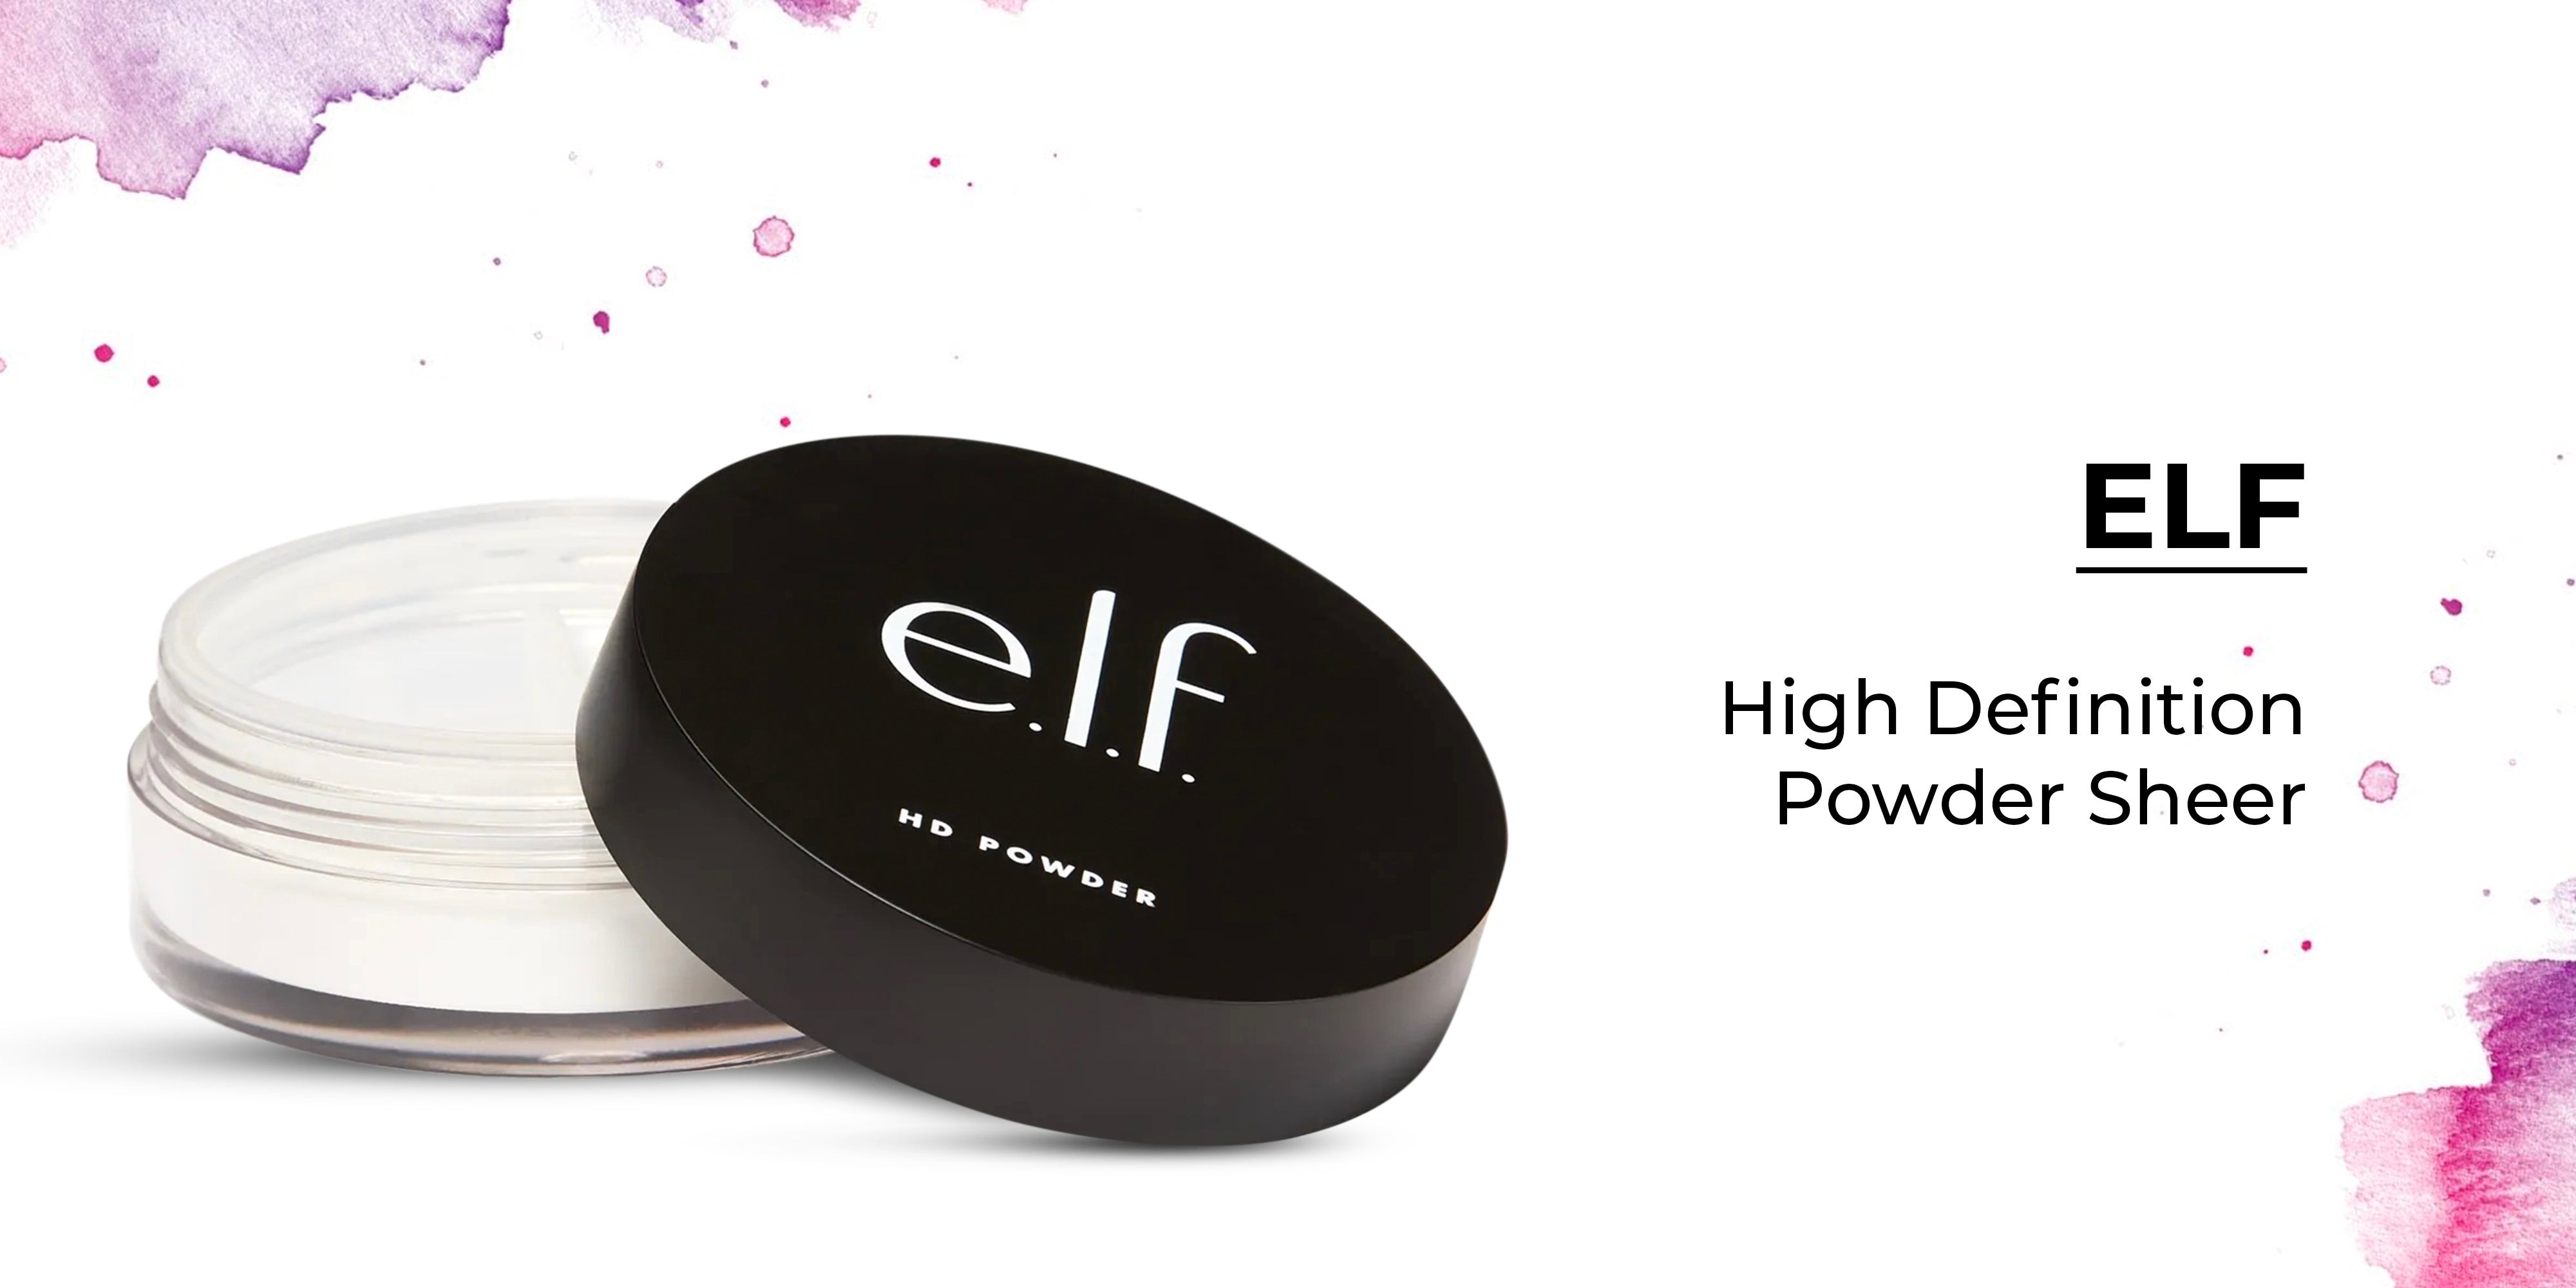 e.l.f. High Definition Powder, Sheer 